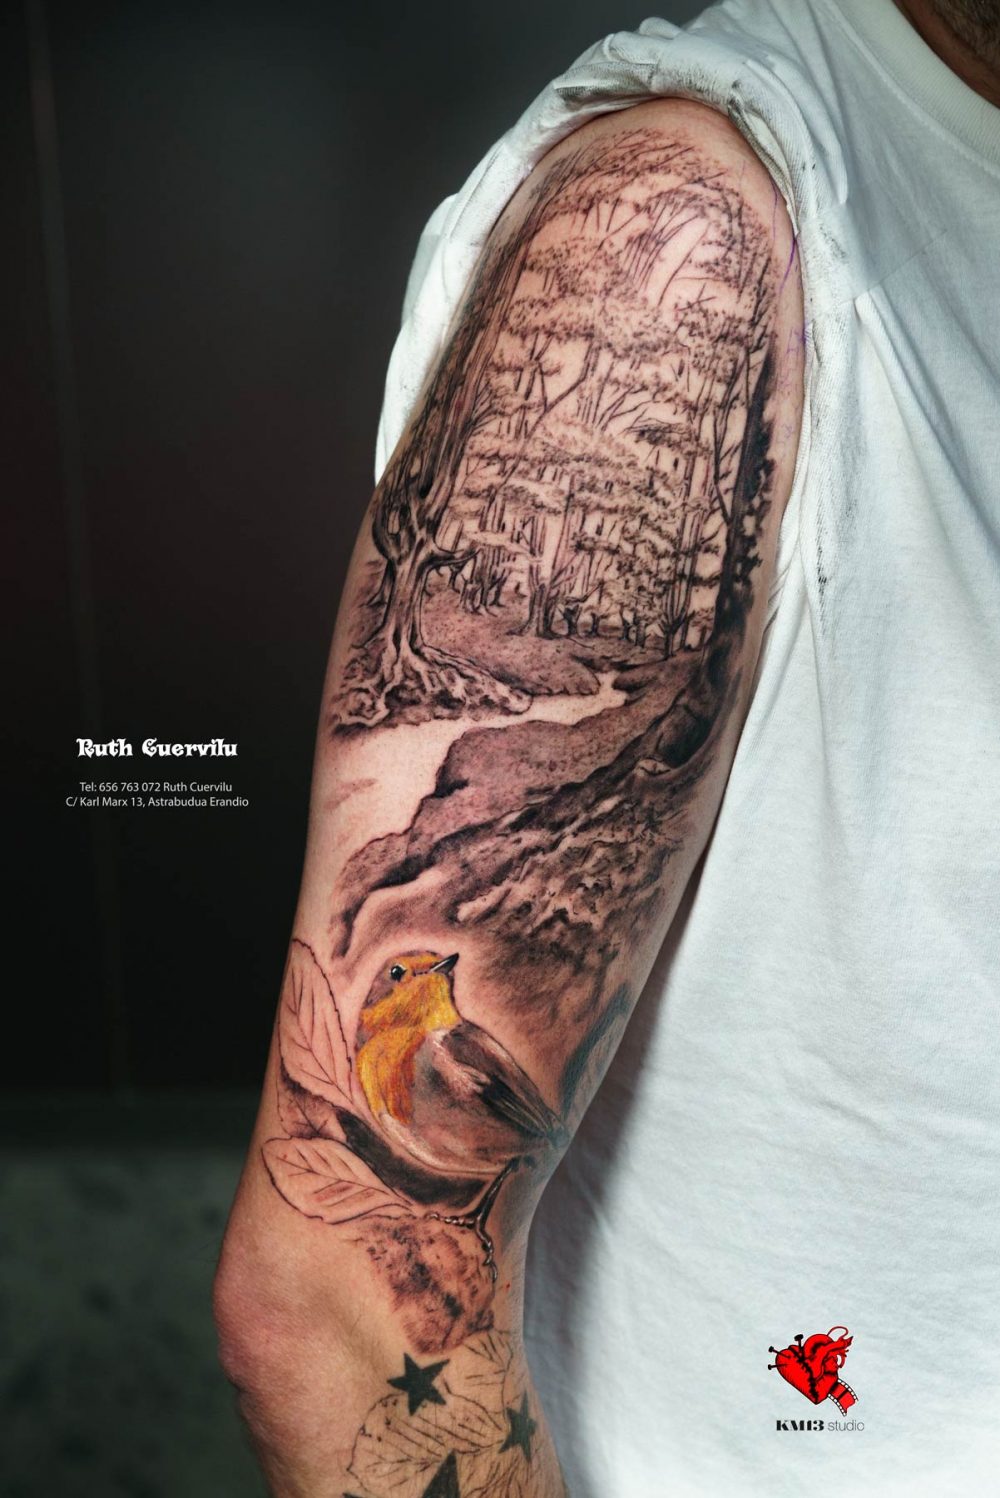 Tatuaje Petirrojo realismo y Gorbeia - Ruth Cuervilu Tattoo - KM13 Studio - estudio de tatuajes erandio astrabudua bilbao bizkaia